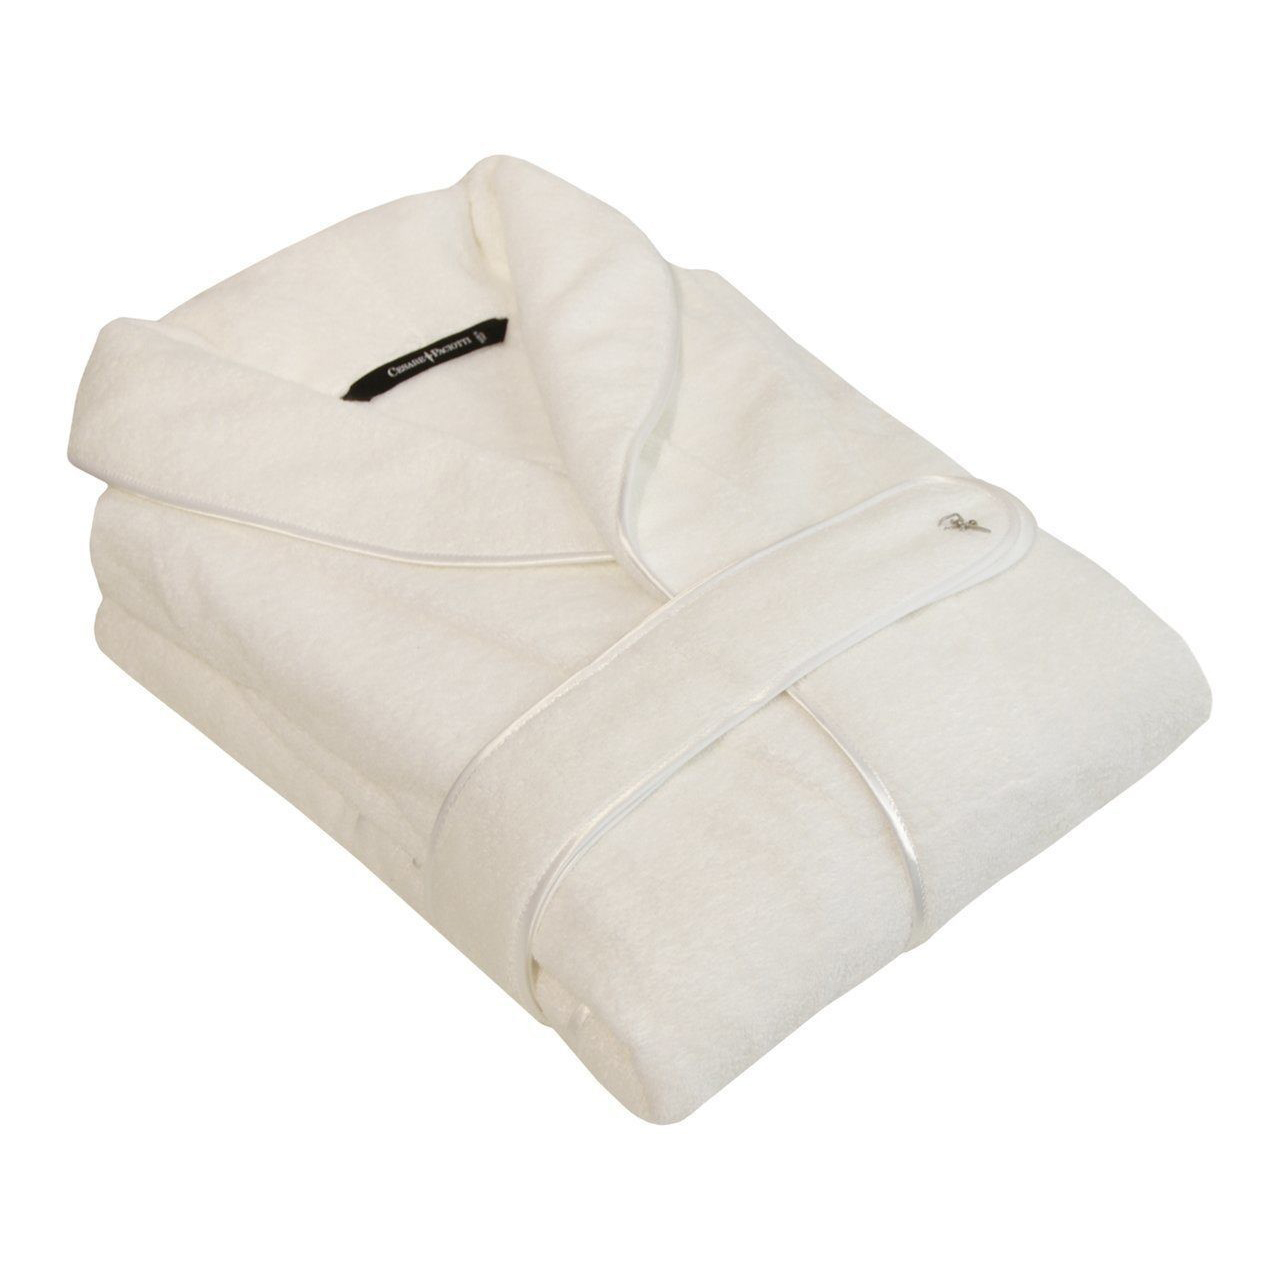 Банный халат Dandy цвет: белый (XL)